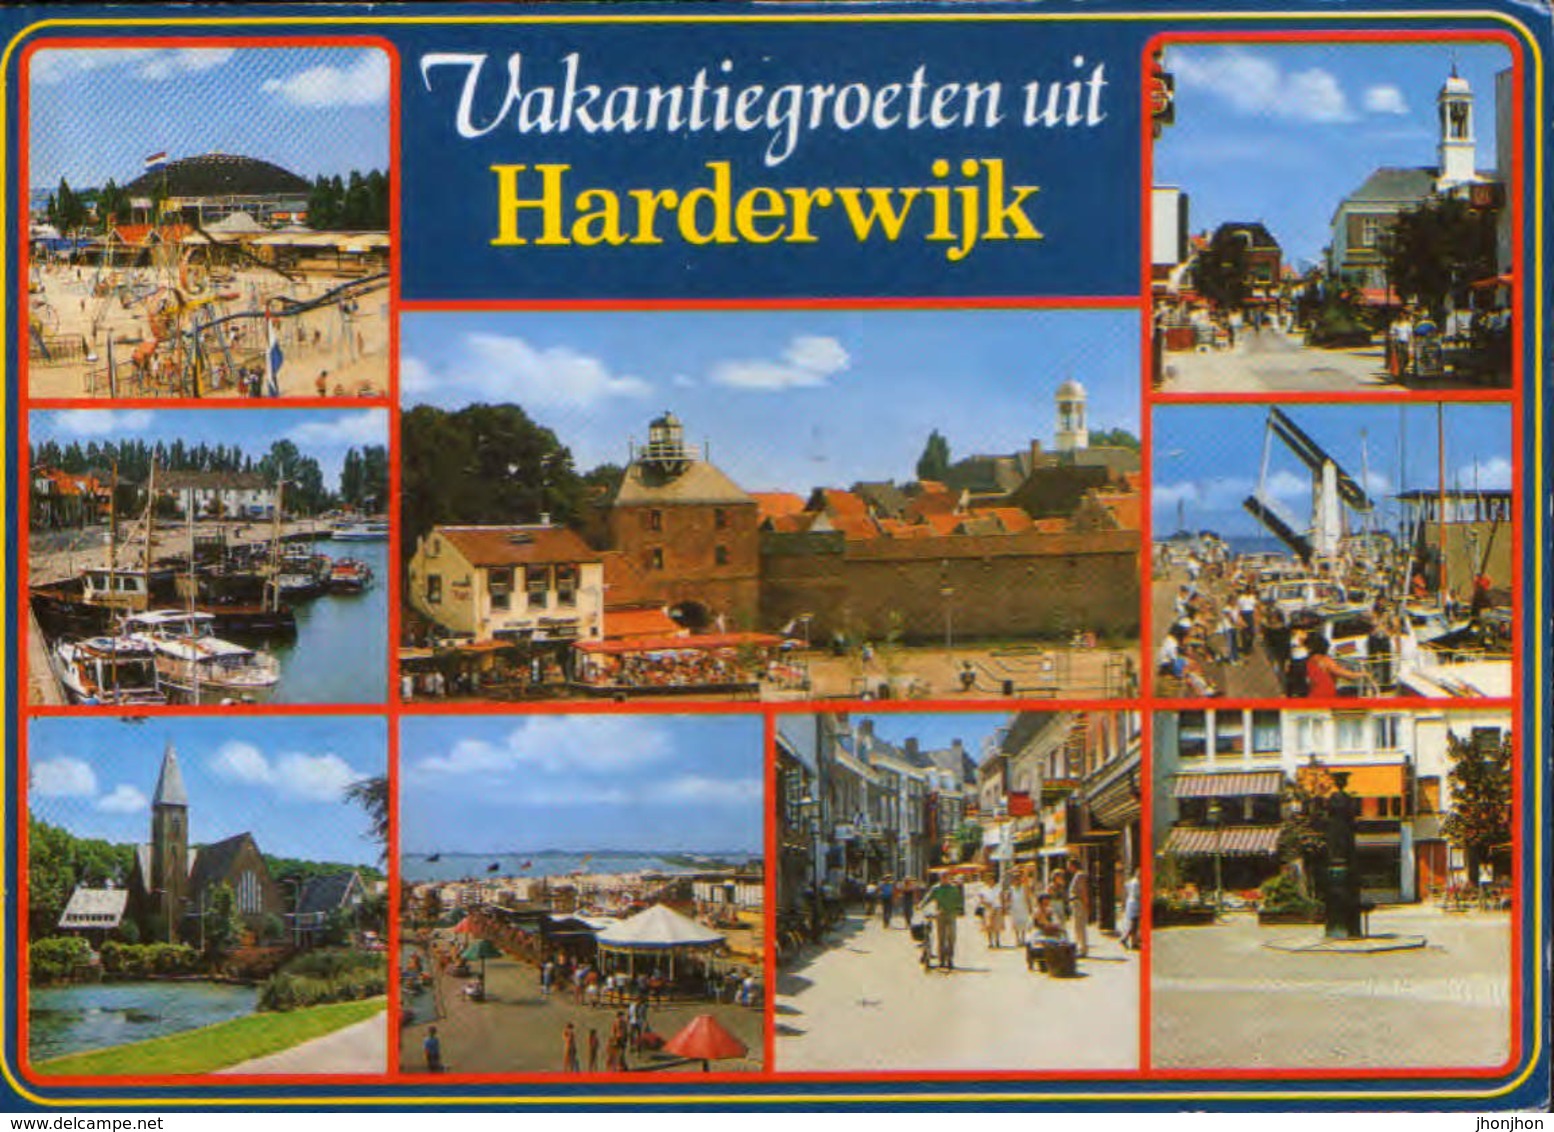 Nederland - Postcard Circulated In 1992 - Harderwijk - Collage Of Images  - 2/scans - Harderwijk